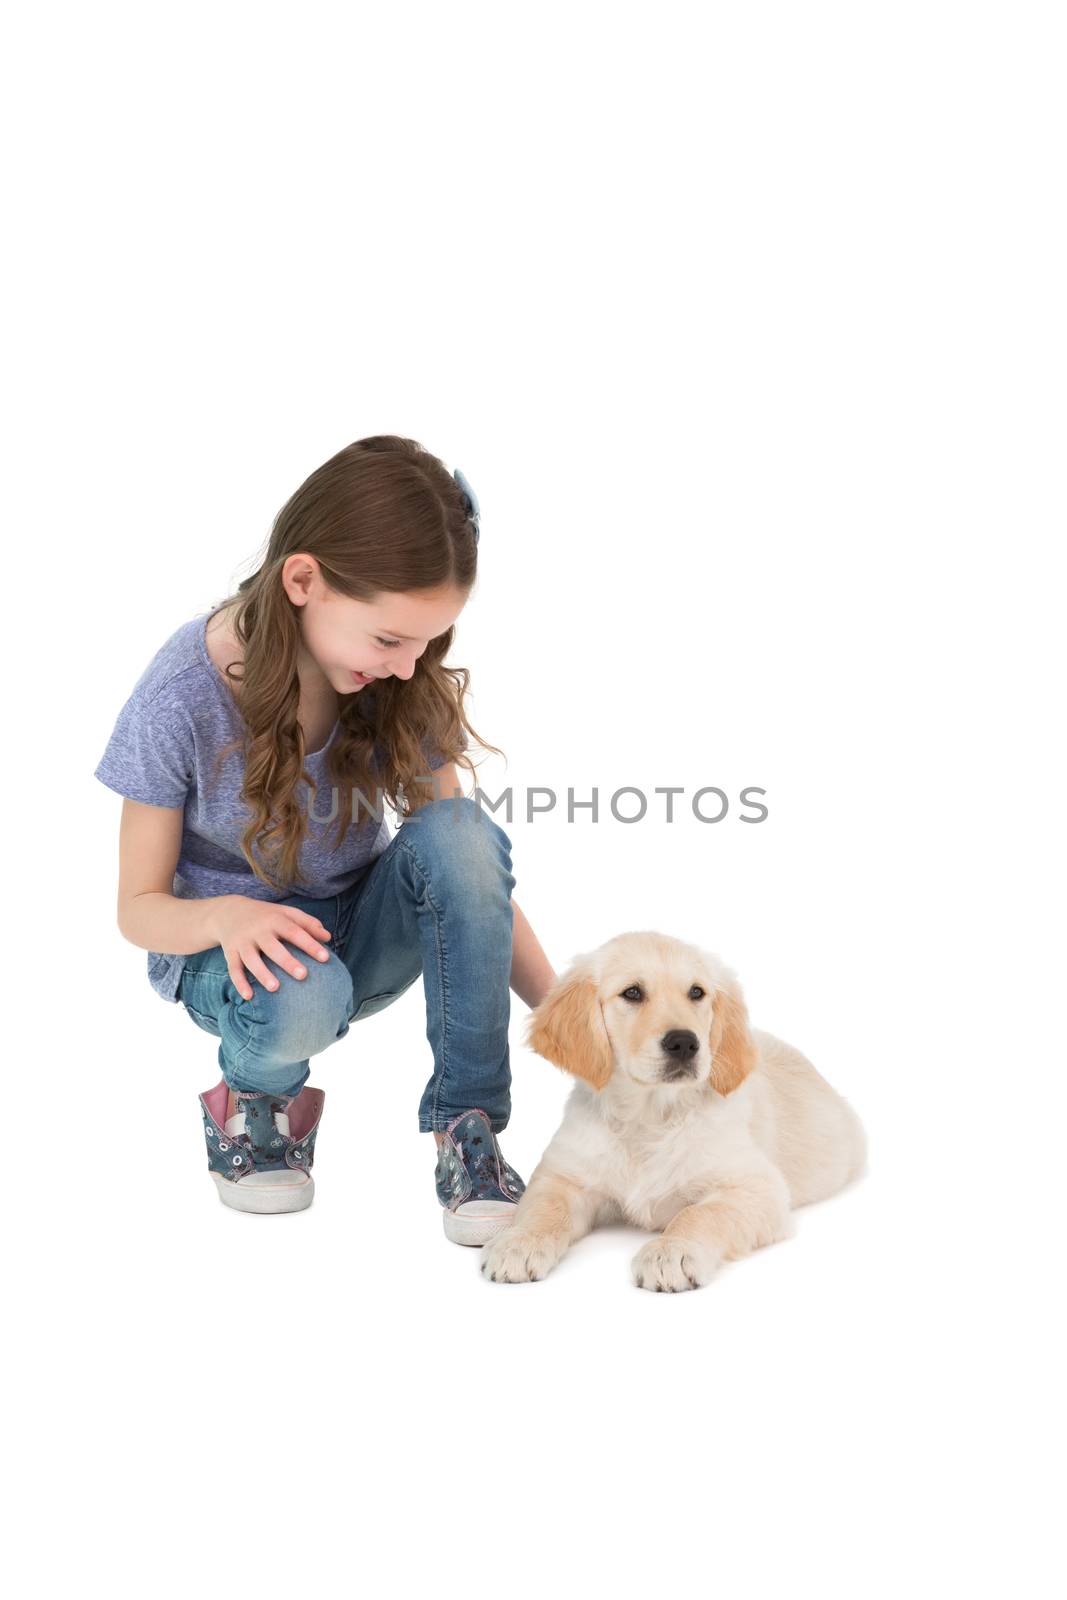 Crouching little girl next dog  by Wavebreakmedia